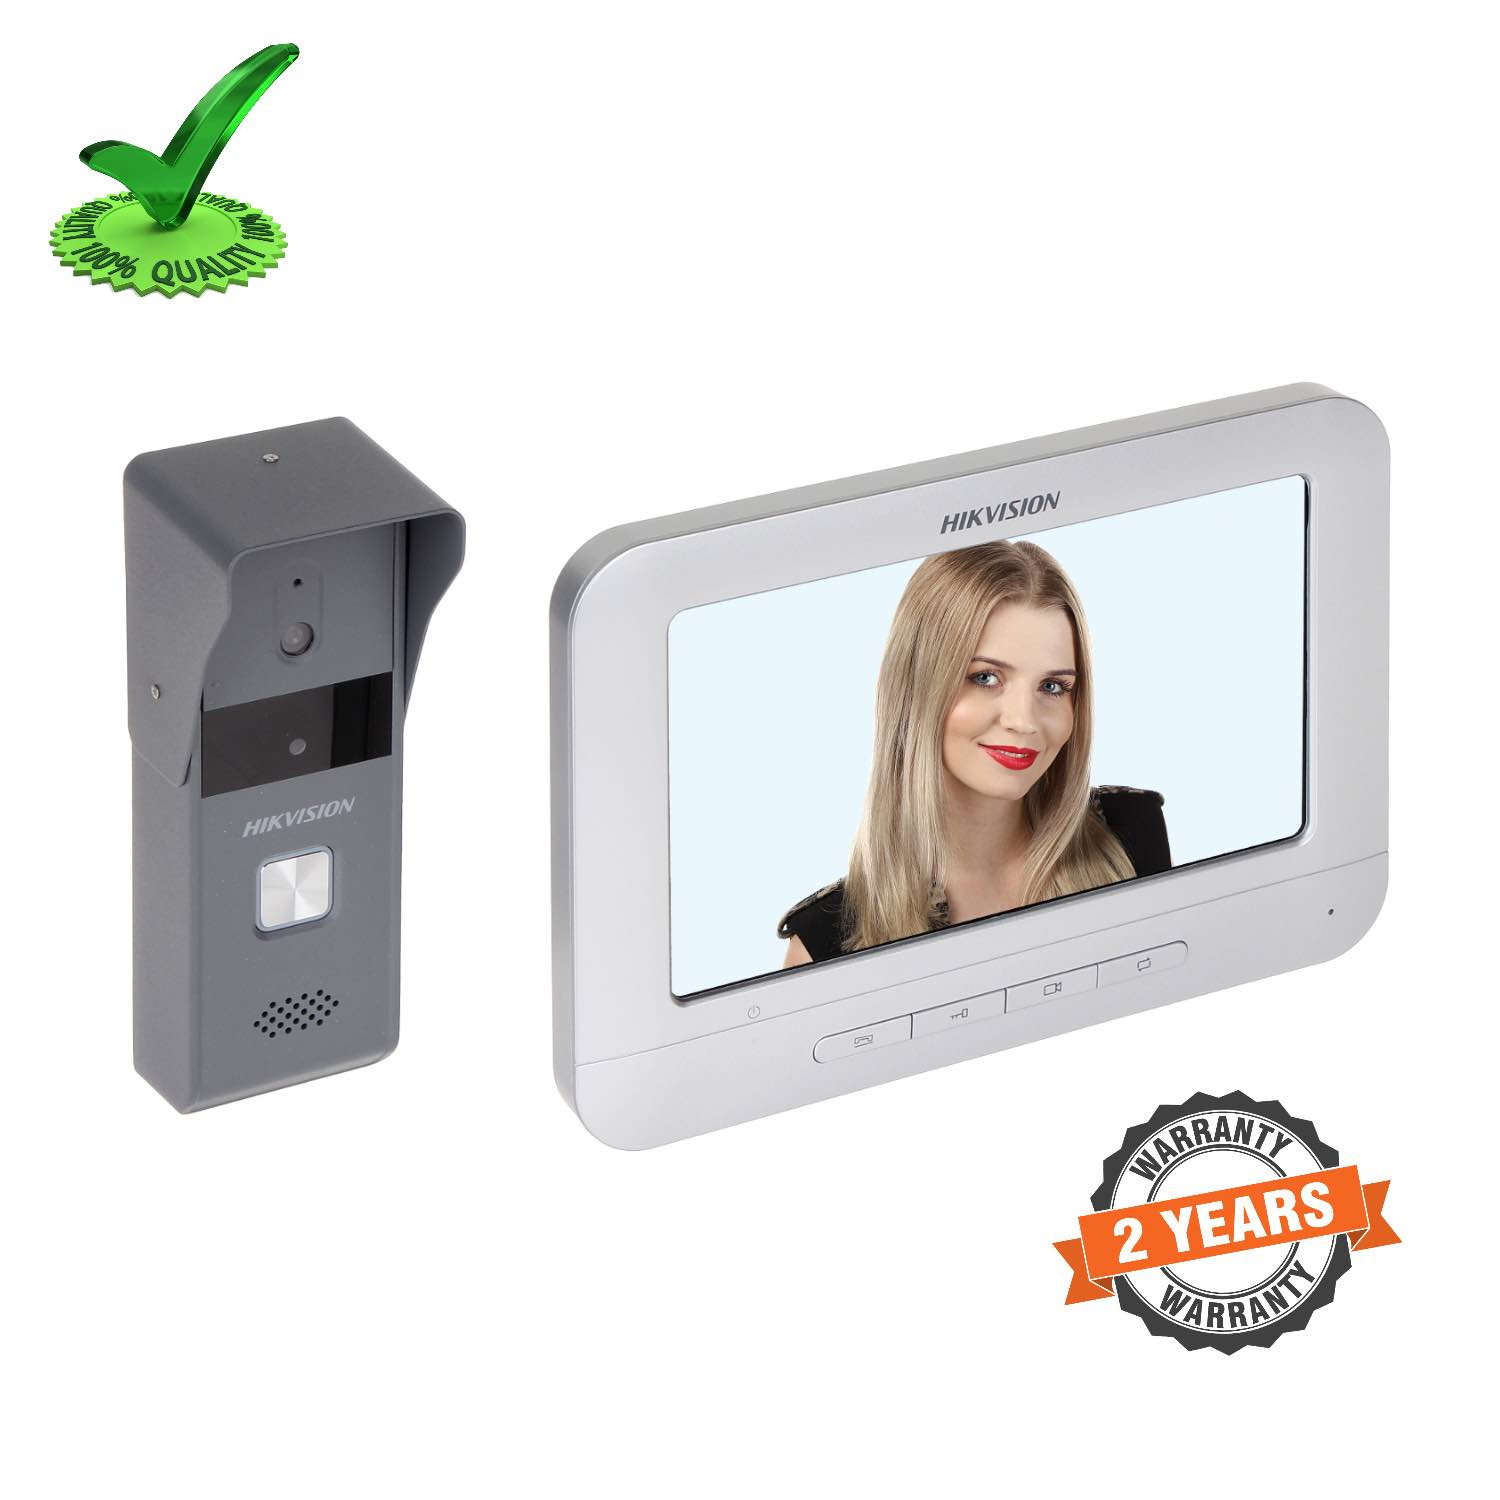 Hikvision DS-KIS203 Video Door Phone